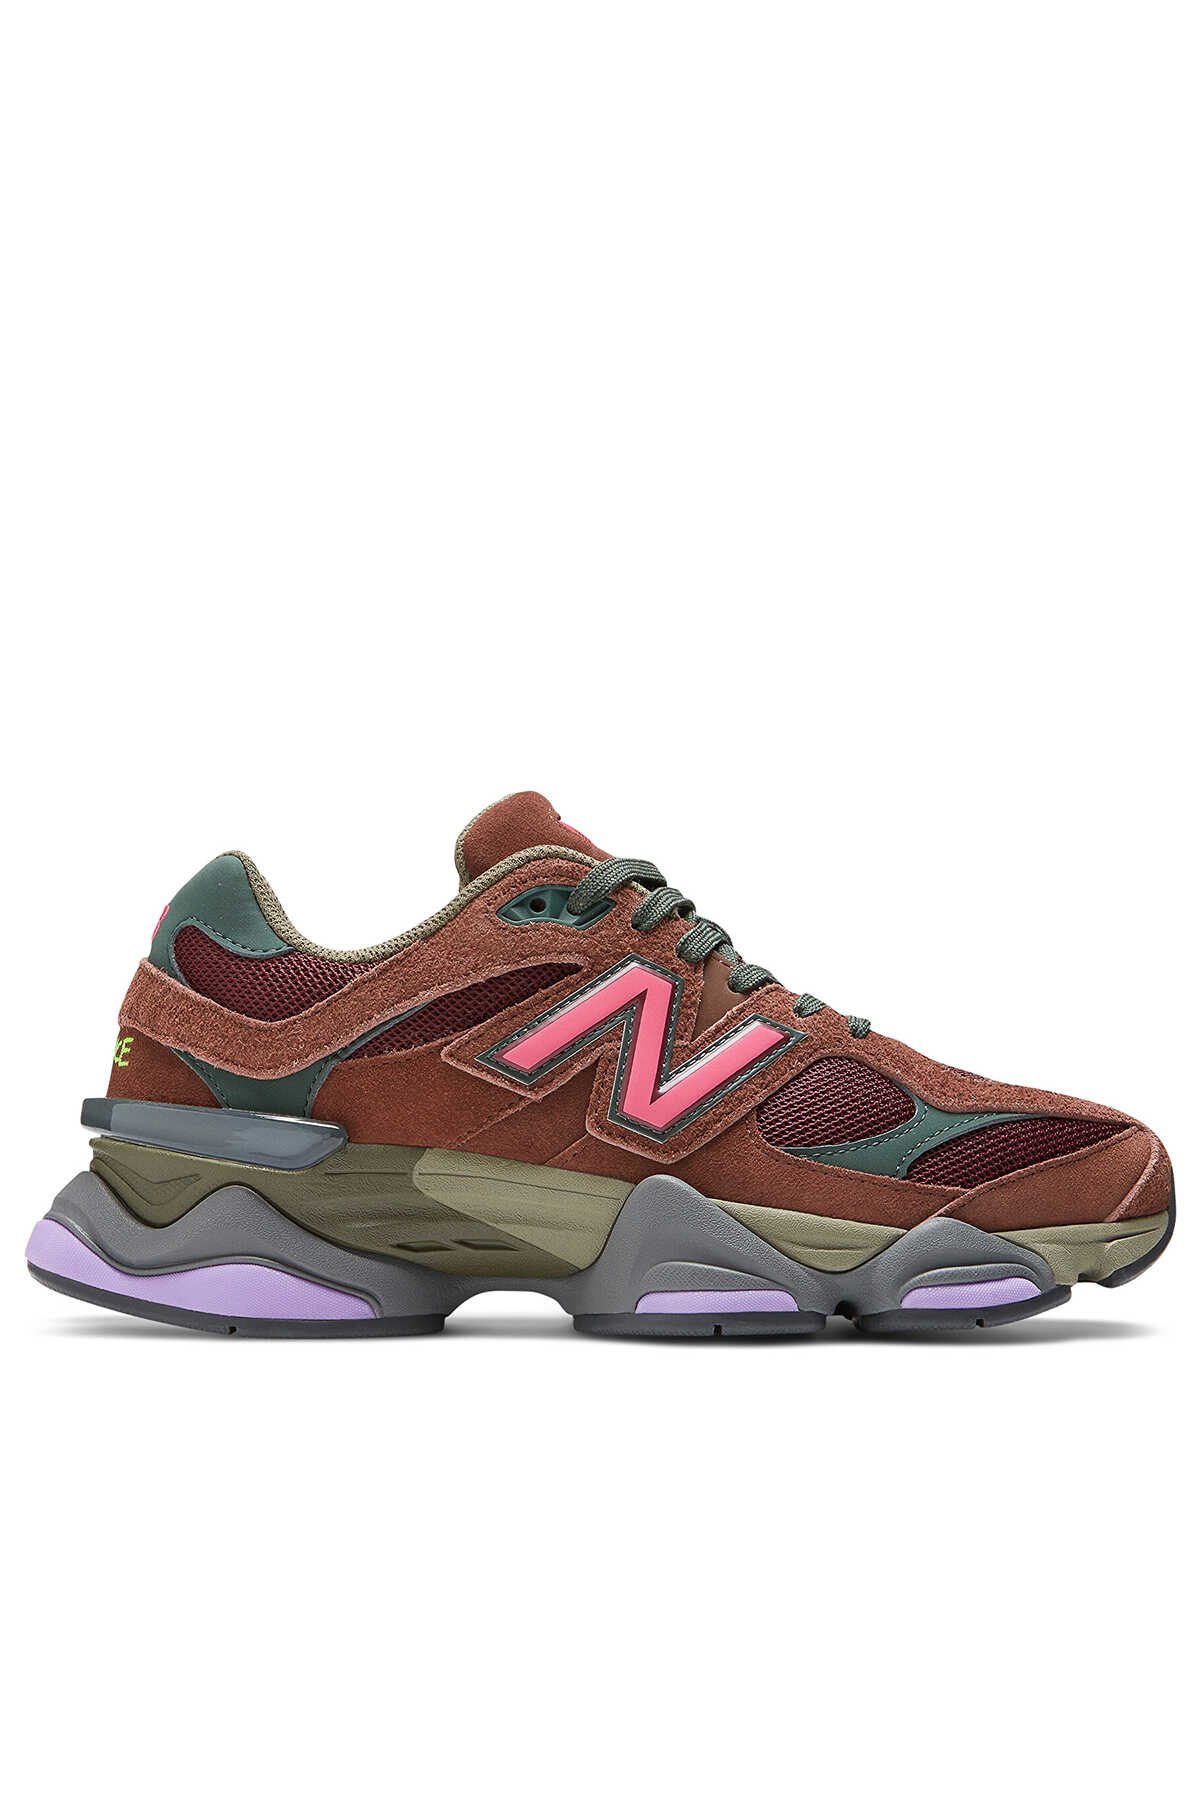 New Balance - New Balance U9060 Sneaker Kadın Ayakkabı Brown